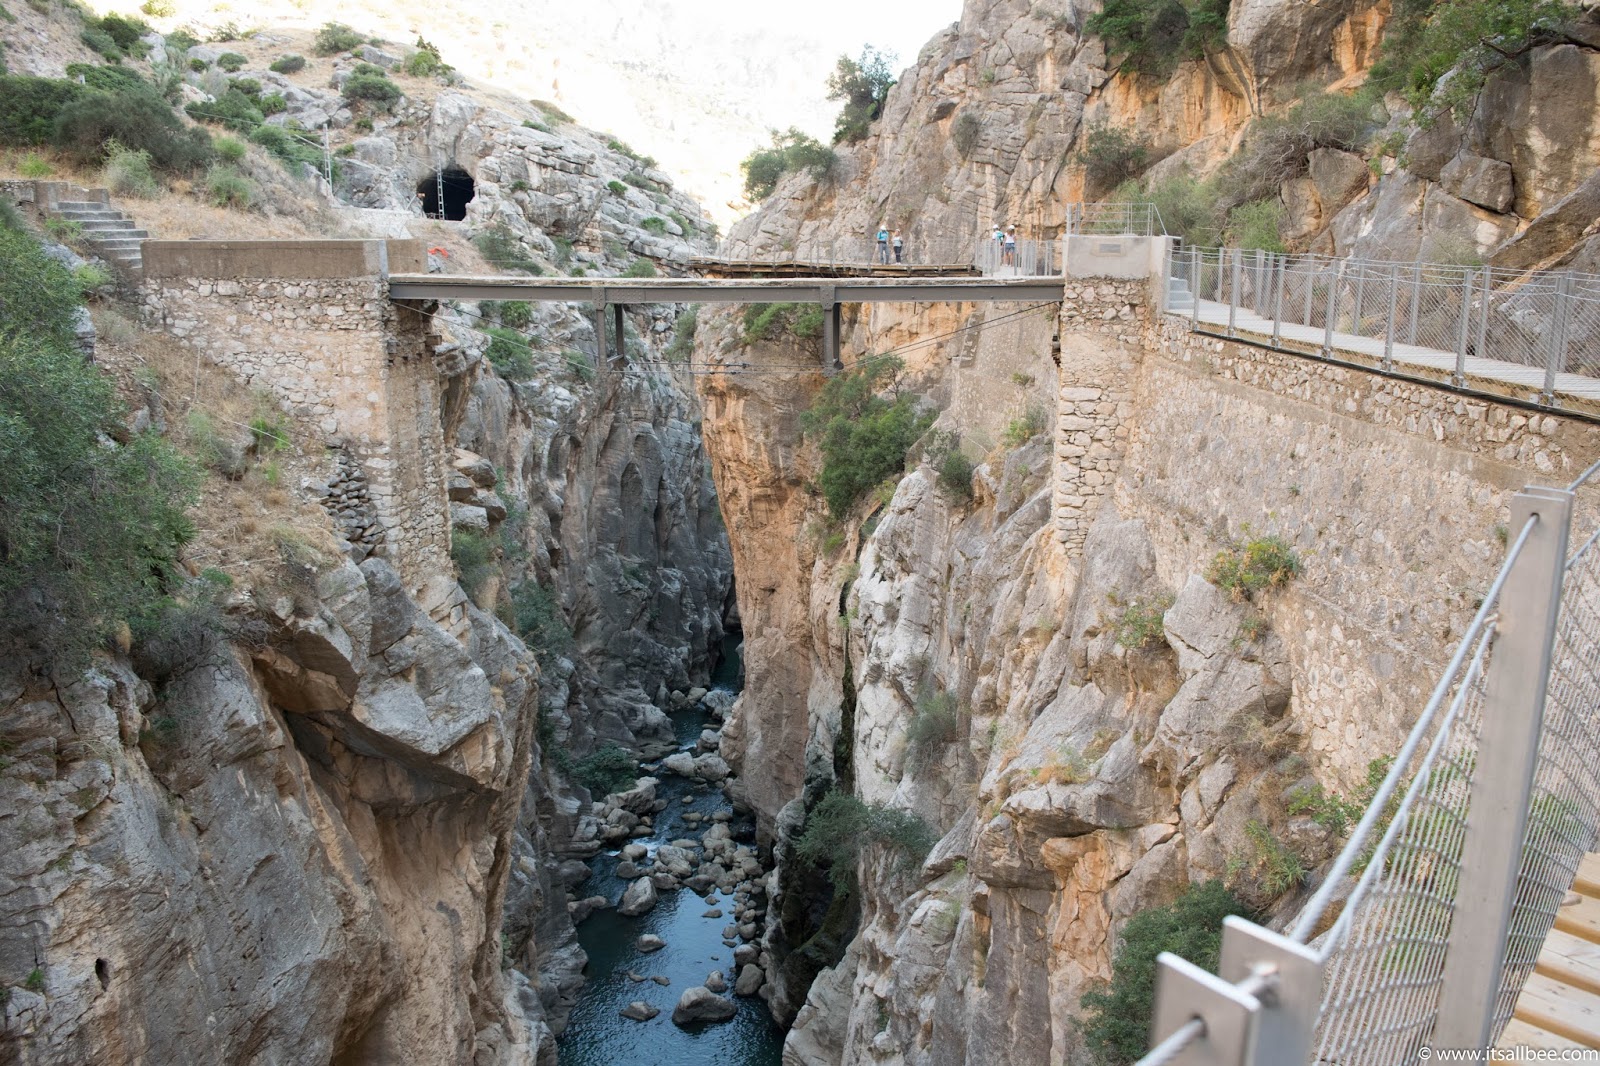 El Caminito Del Rey | Hiking Spain's Most Dangerous Hiking Trail